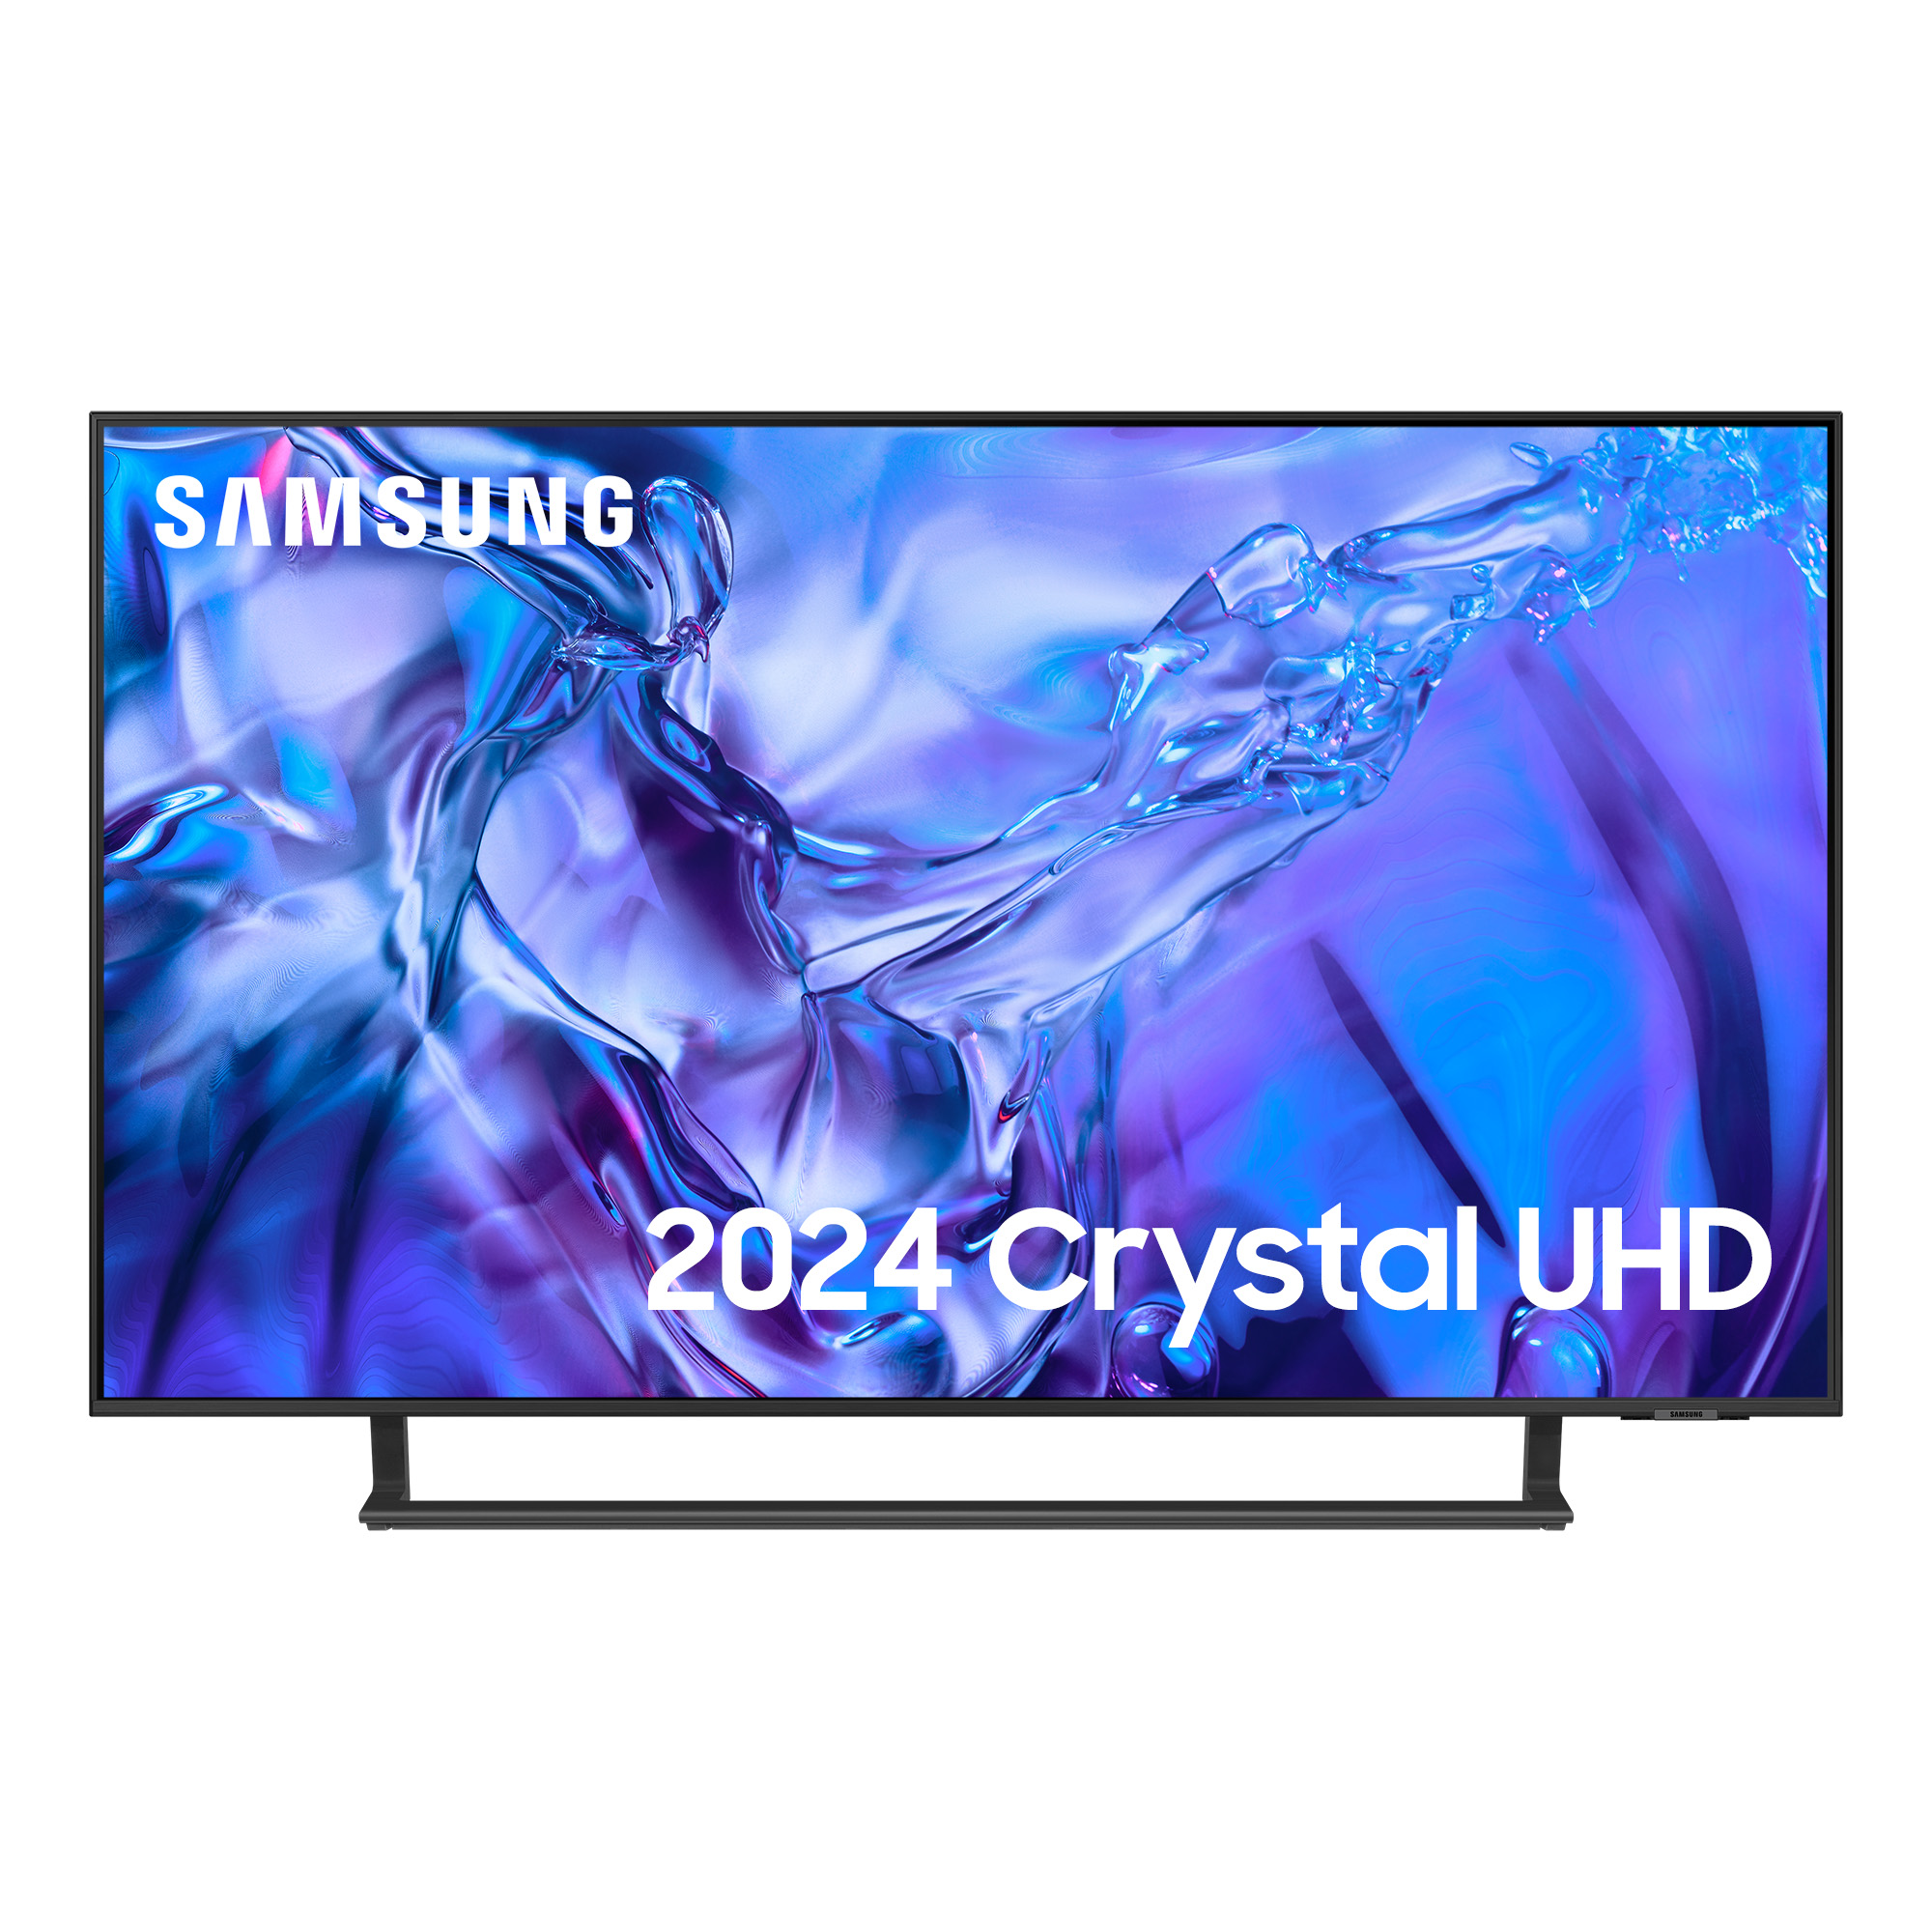 Samsung 43inch Crystal UHD 4K LED SMART TV Wi-Fi Alexa